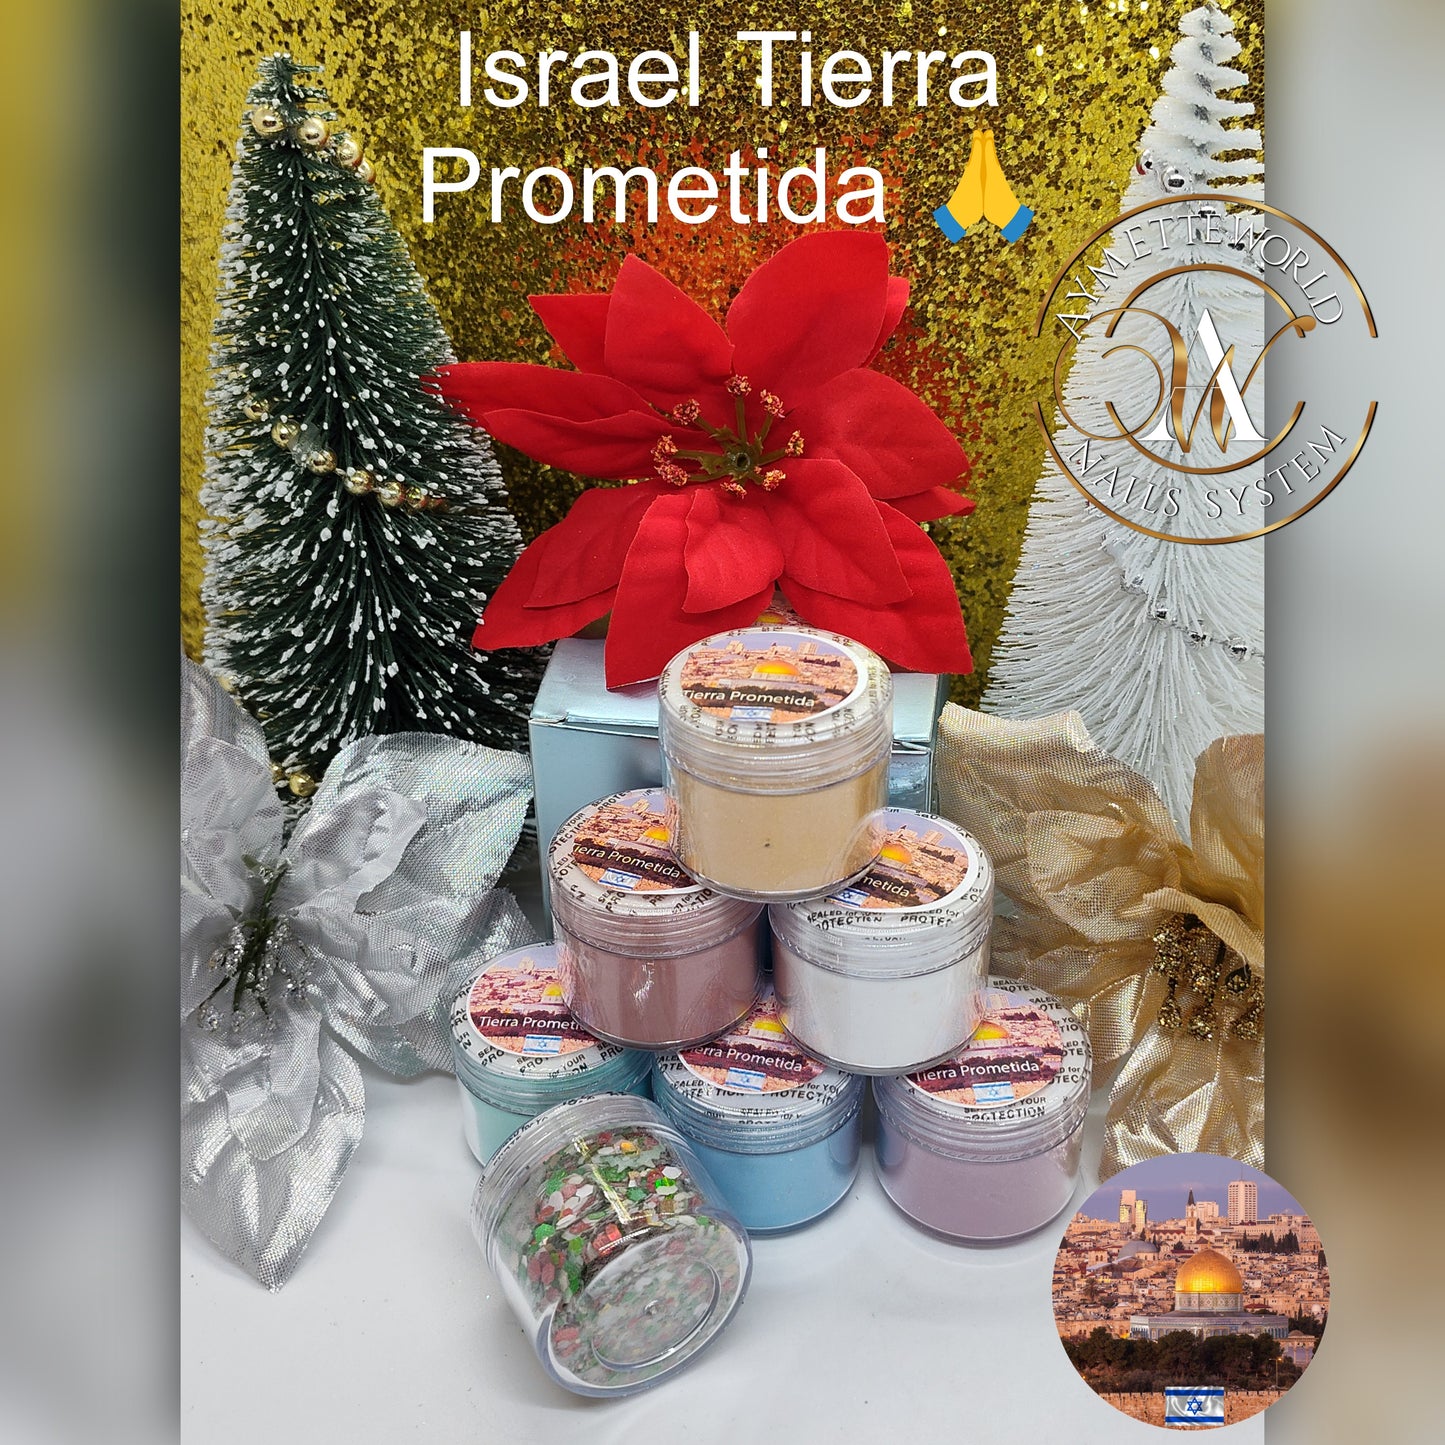 Israel Tierra Prometida 🙏